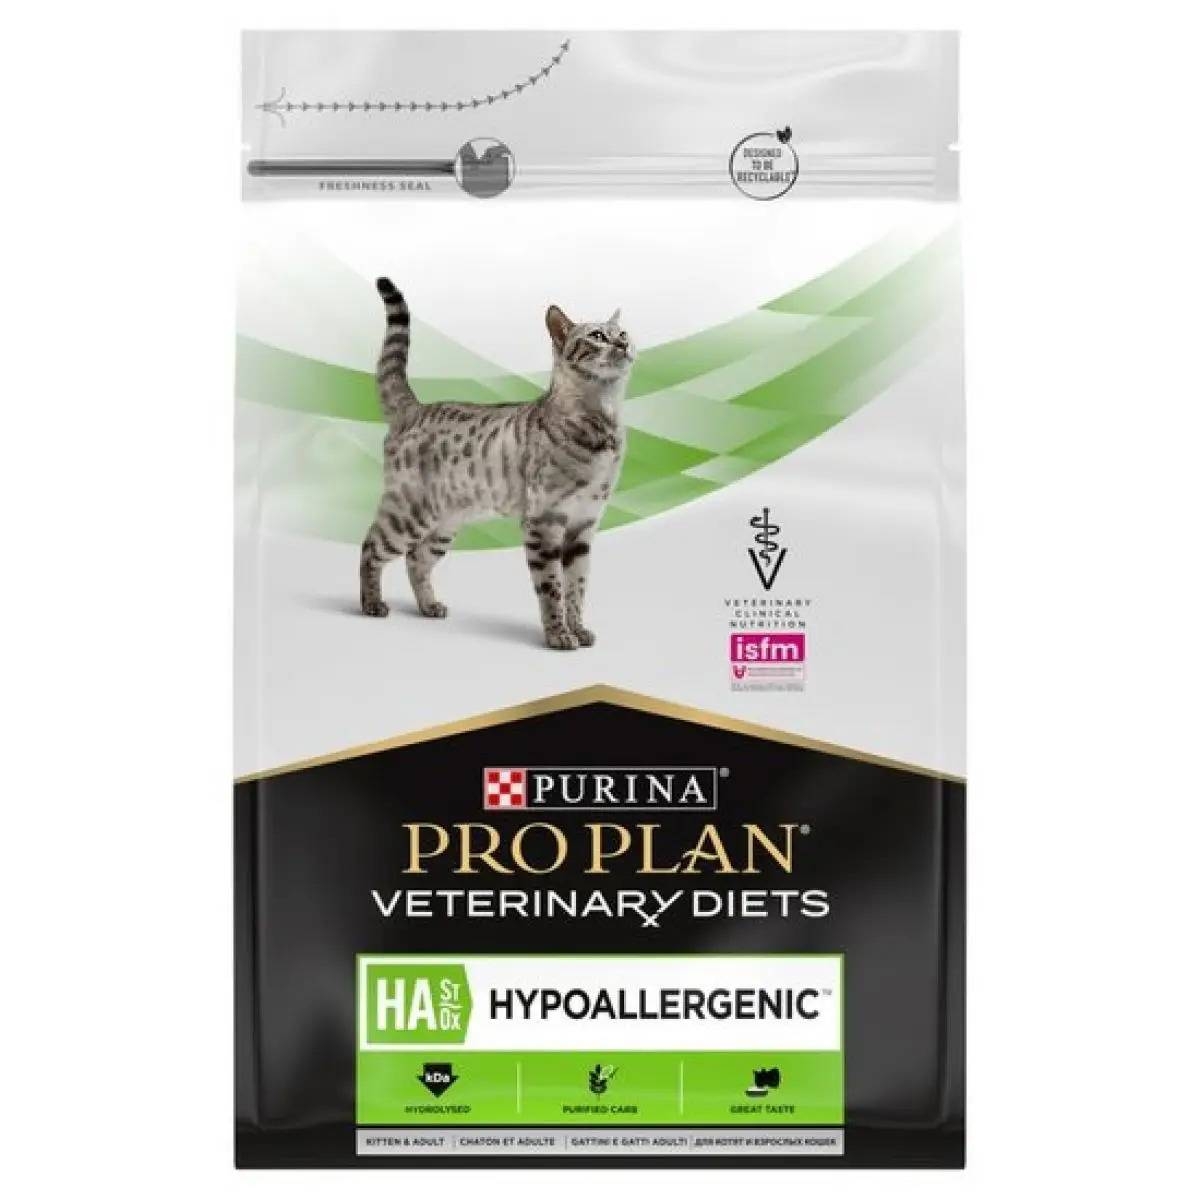 Purina Veterinary Diets Feline HA, Hypoallergenic, 3.5 kg petmart.ro